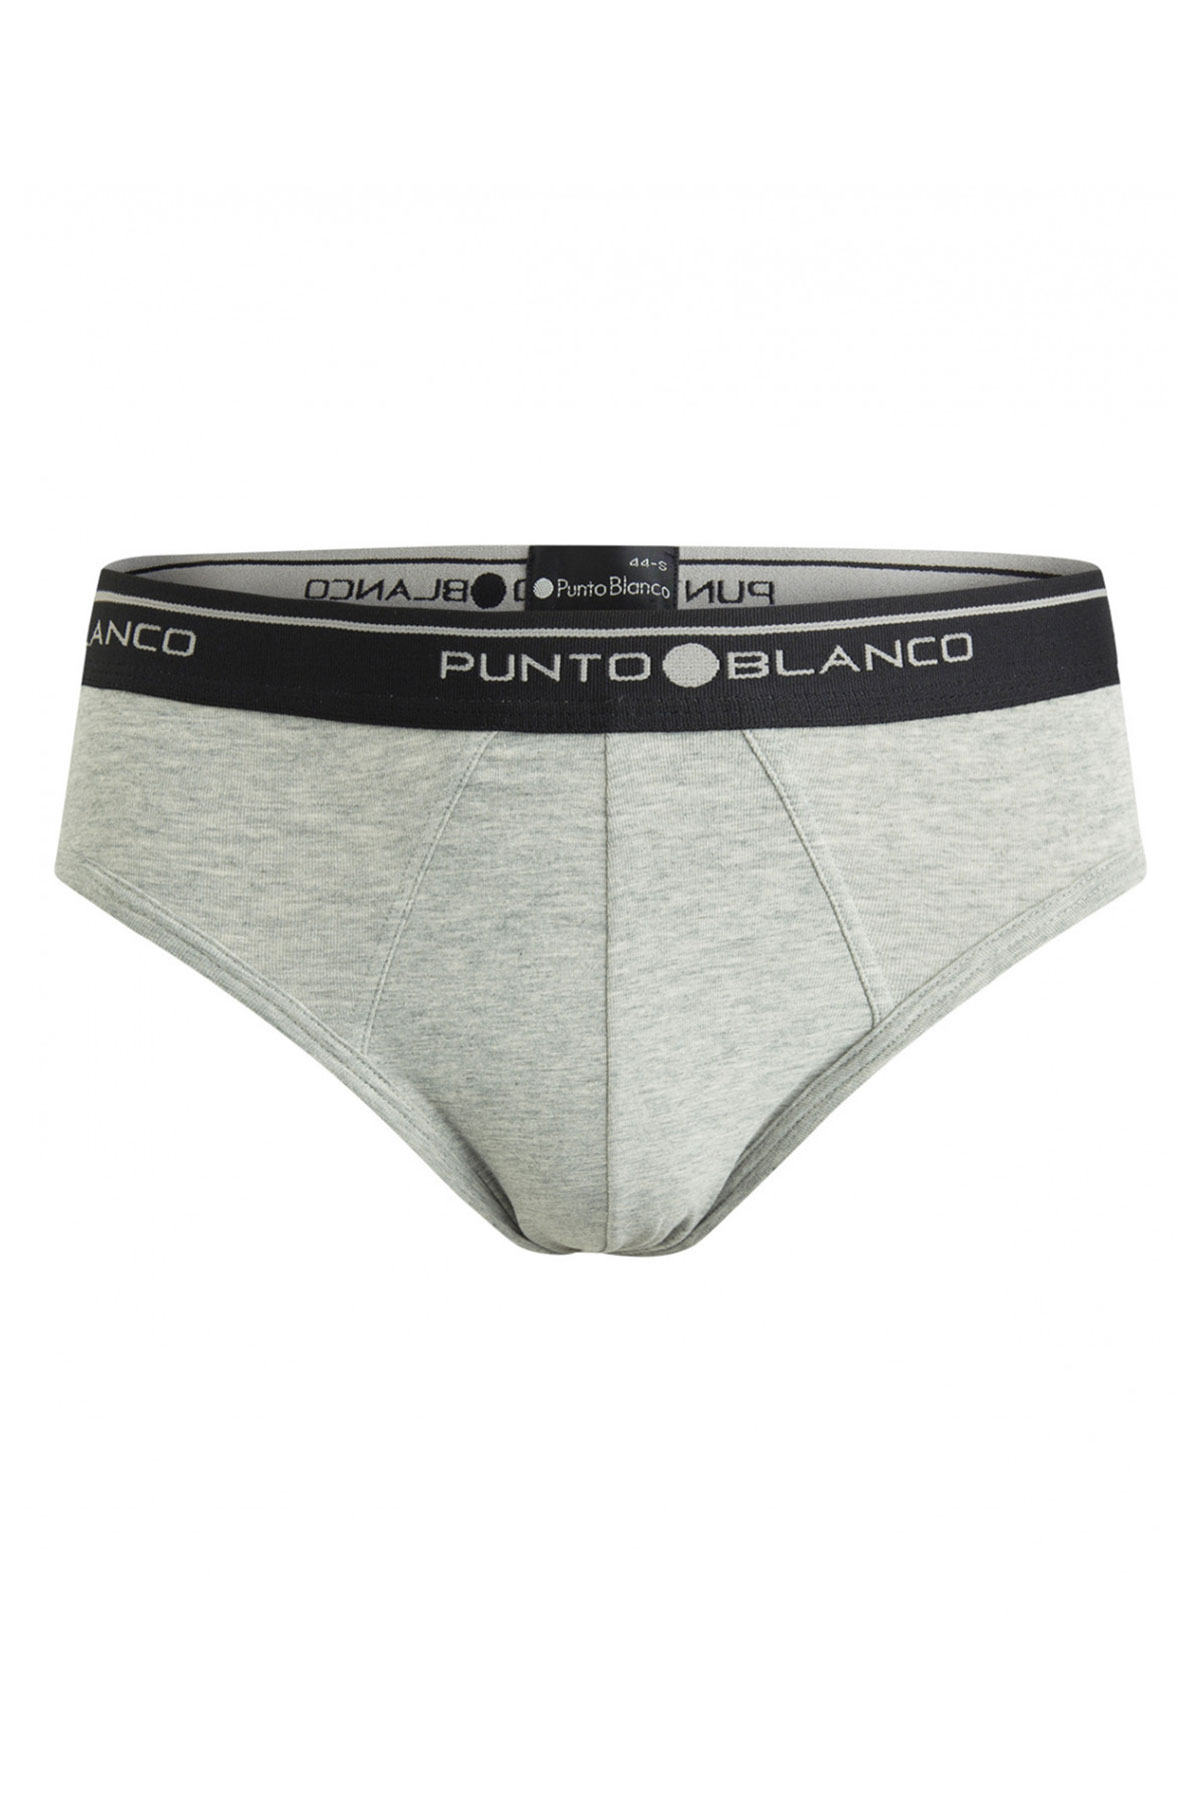 Punto Blanco Basix 3-Pack Brief, Assorted, 5348910-785, Mens Briefs